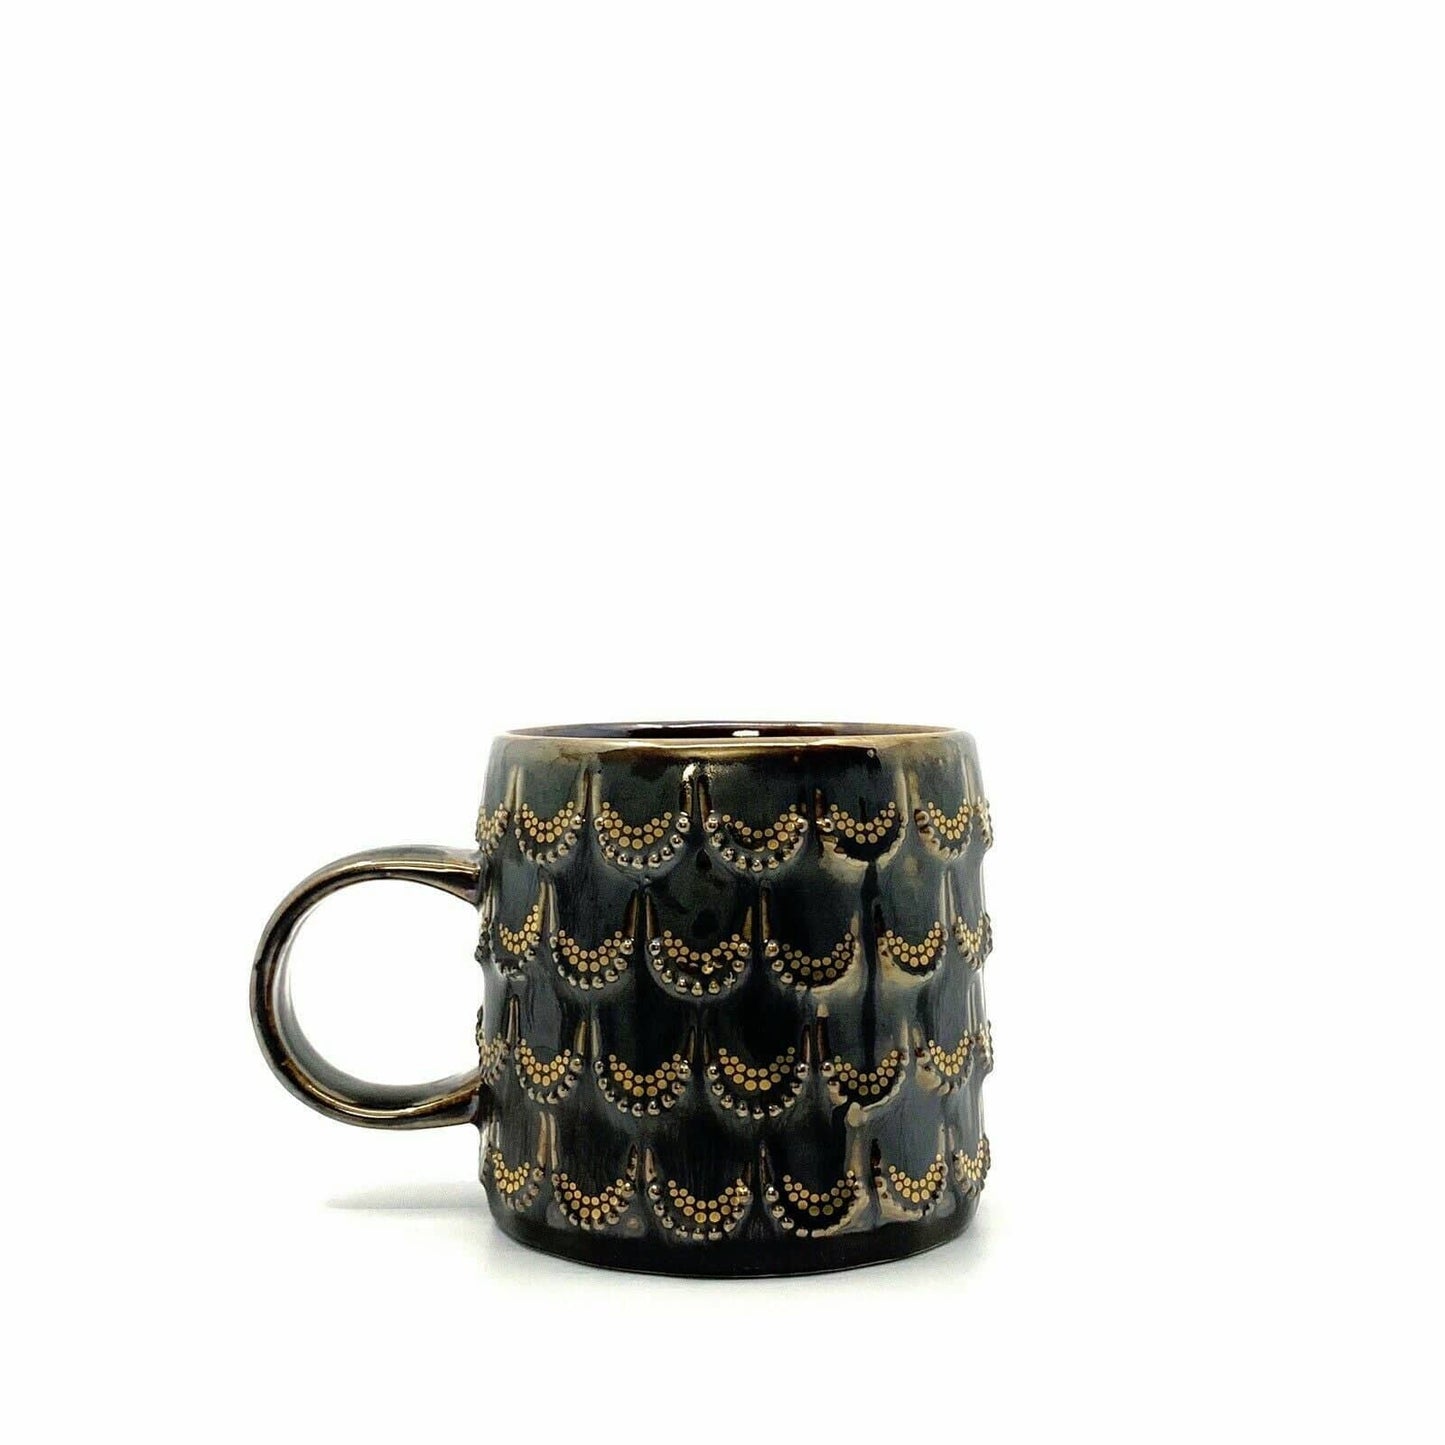 Elegant Starbucks Golden Scales Anniversary Cup - 10 fl oz, Brown/Gold, Ceramic